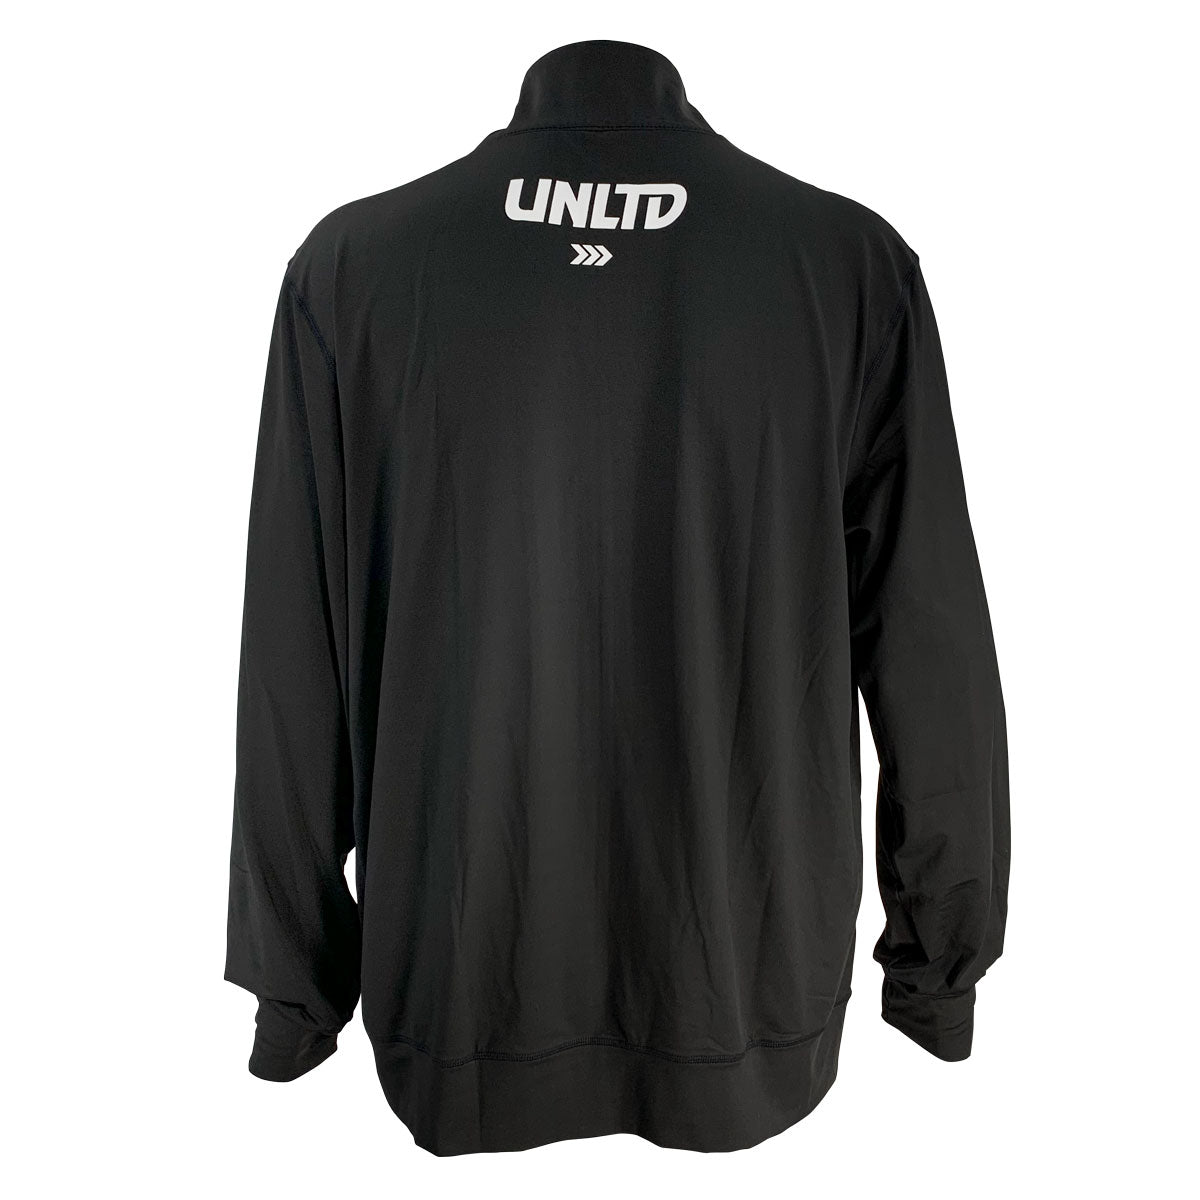 [2024 New Item] UNLIMITED HYDRO Men's Rash Guard Front Zipper Unlimited ULR0501